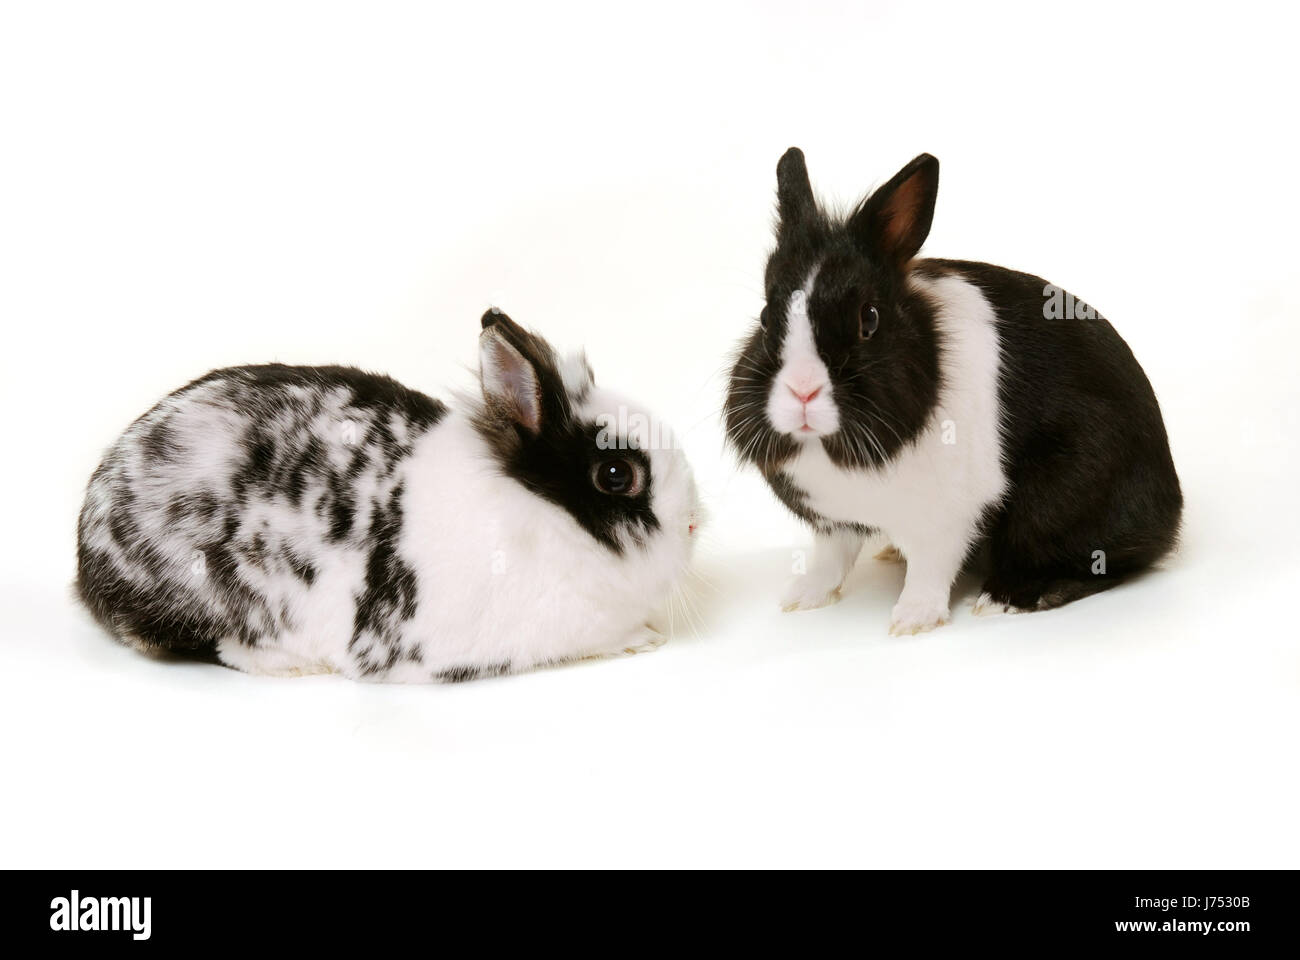 animal pet rabbit rabbits two studio photography animals pets black swarthy Stock Photo